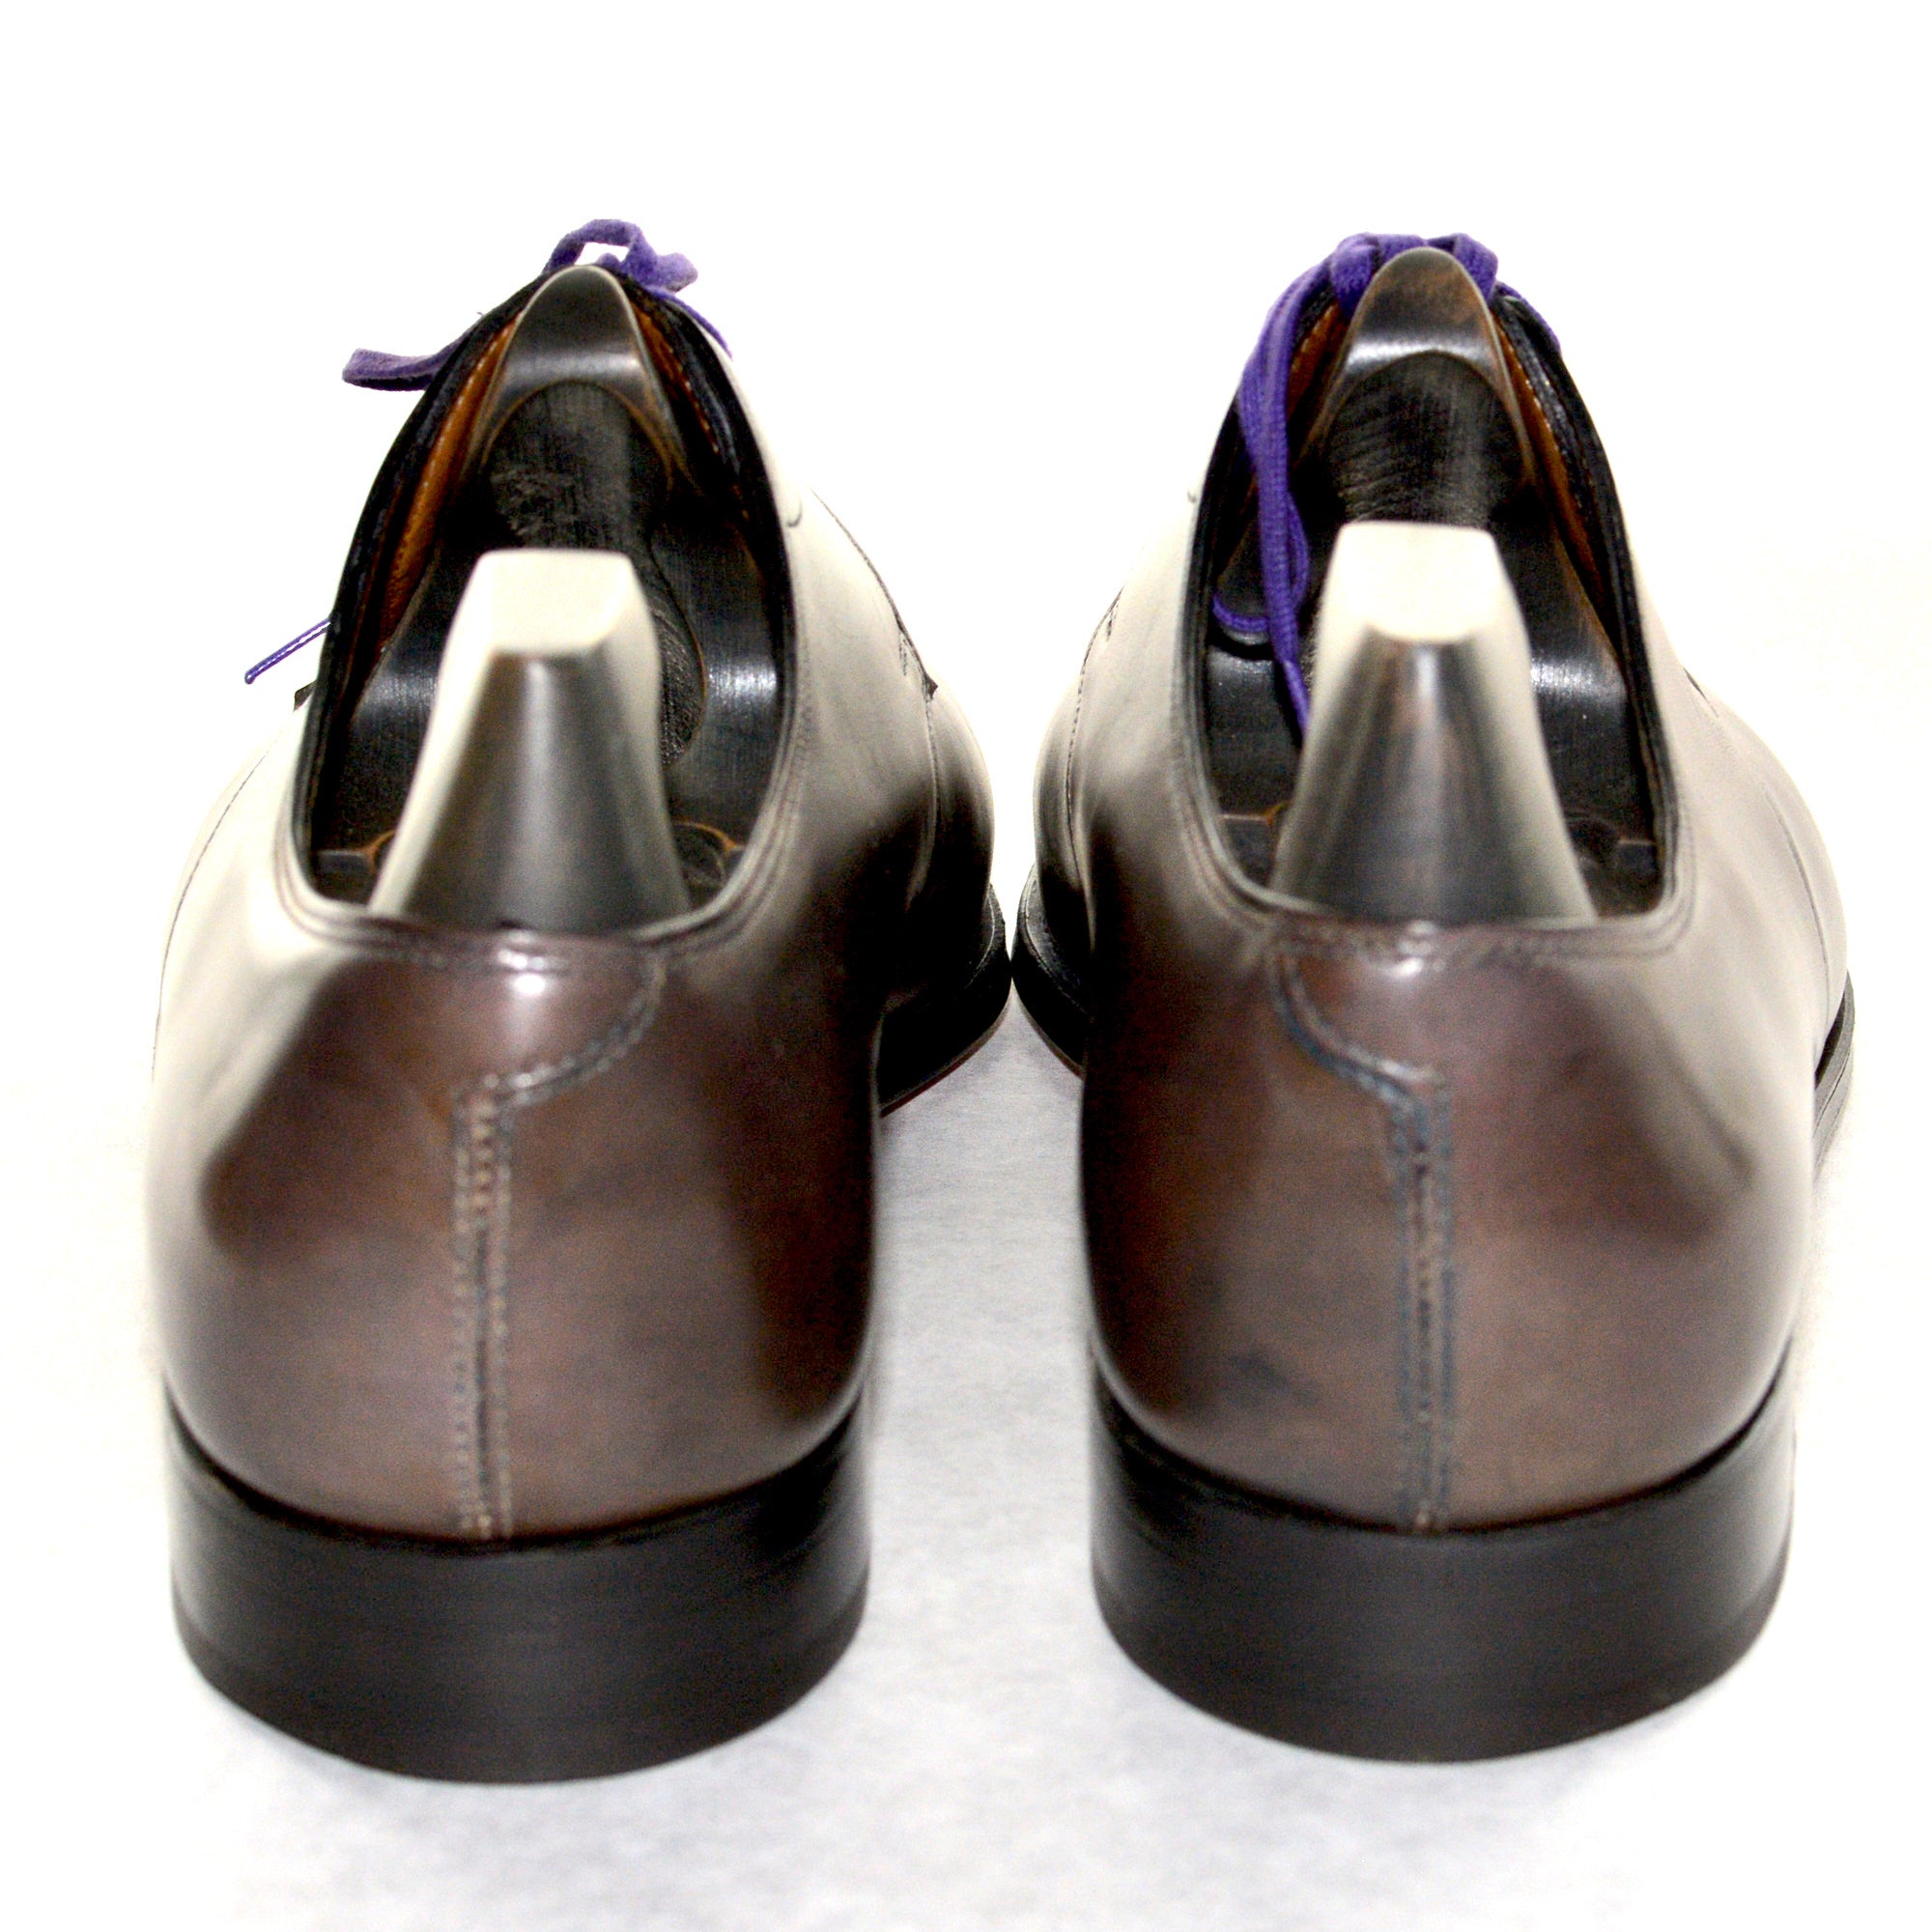 JOHN LOBB x PAUL SMITH "Willoughby" Museum Calf Derby Shoes 8.5E US 9.5 8000 JOHN LOBB